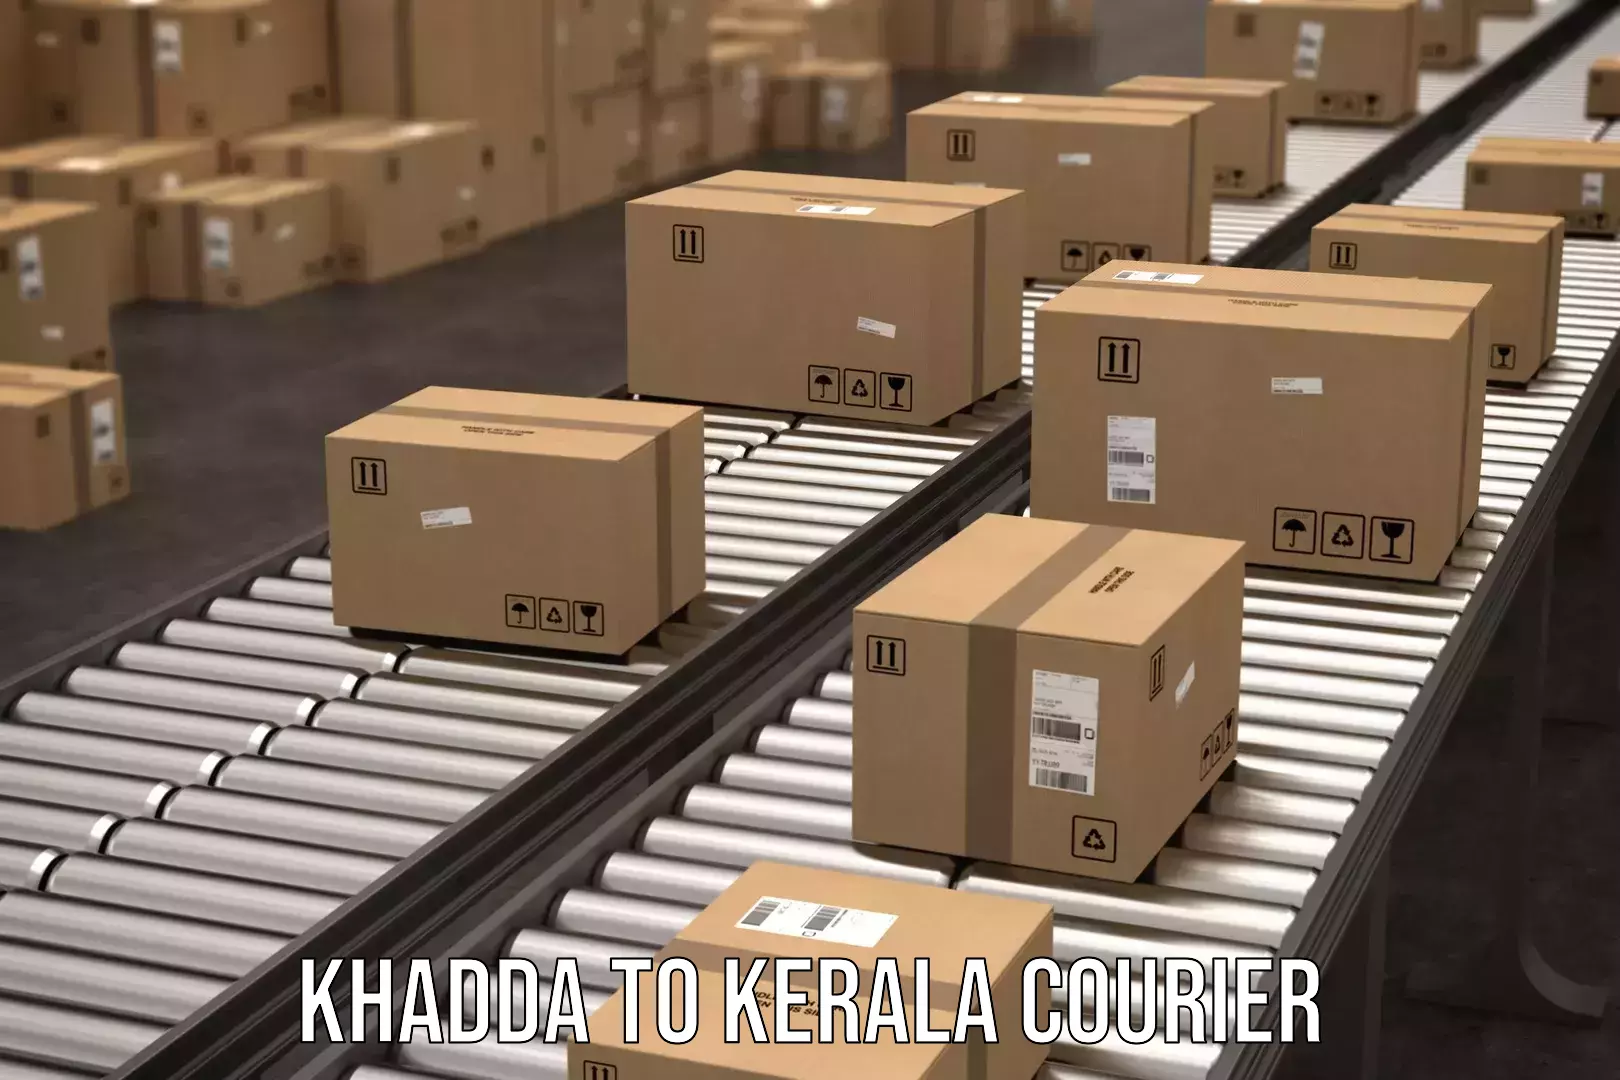 Quick dispatch service Khadda to Kerala